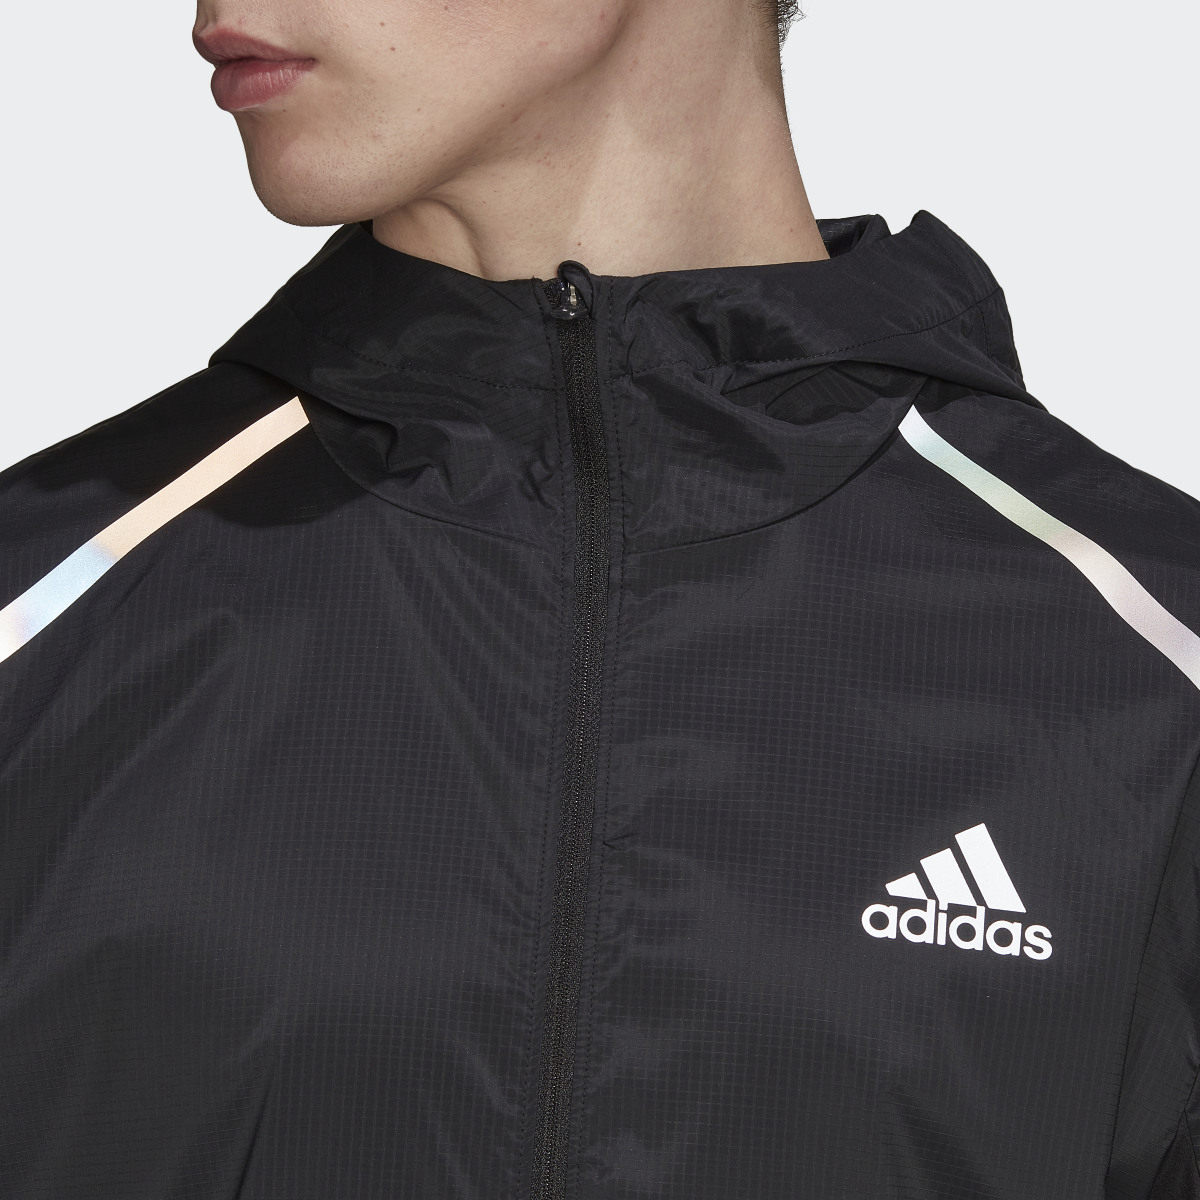 Adidas Marathon Jacket. 7